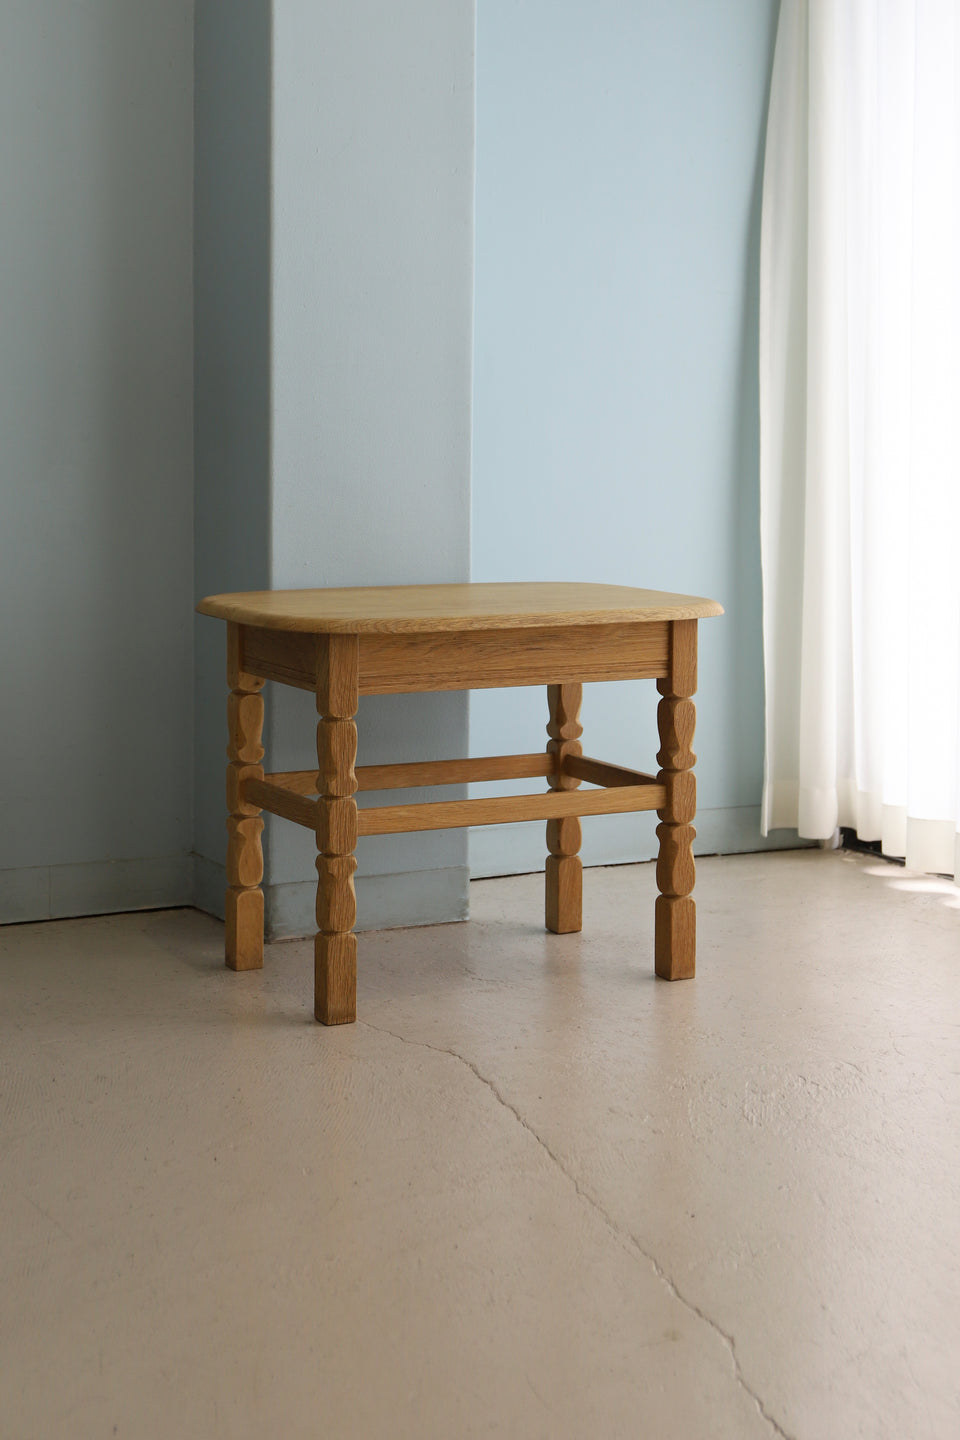 Oakwood Side Table Danish Vintage/デンマークヴィンテージ オーク材 サイドテーブル 北欧家具